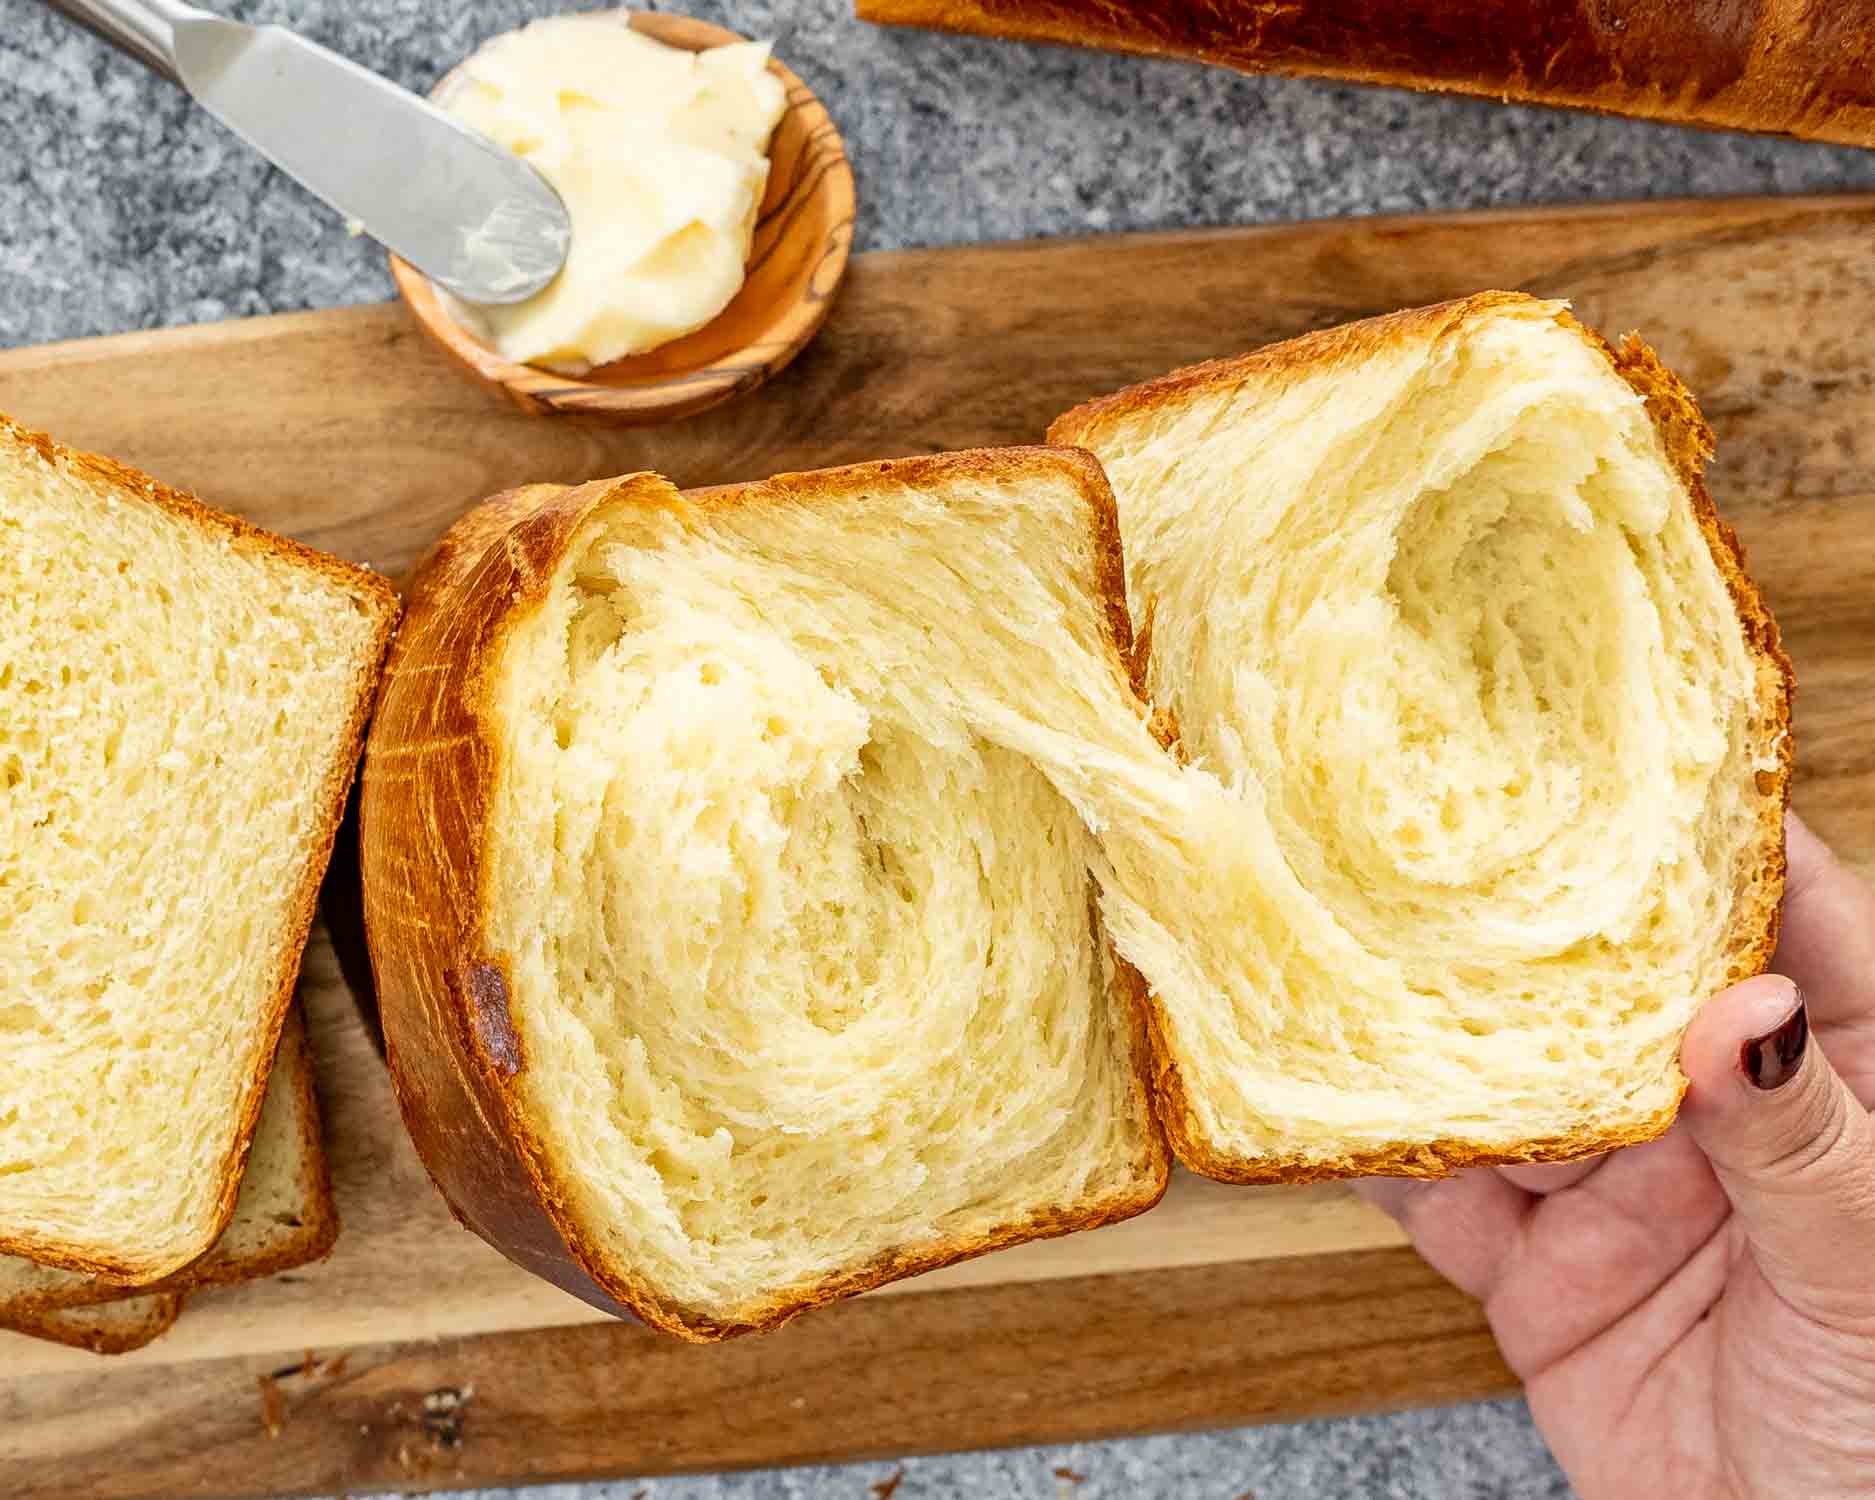 a brioche bread broken in half showing all the flakiness of the bread.